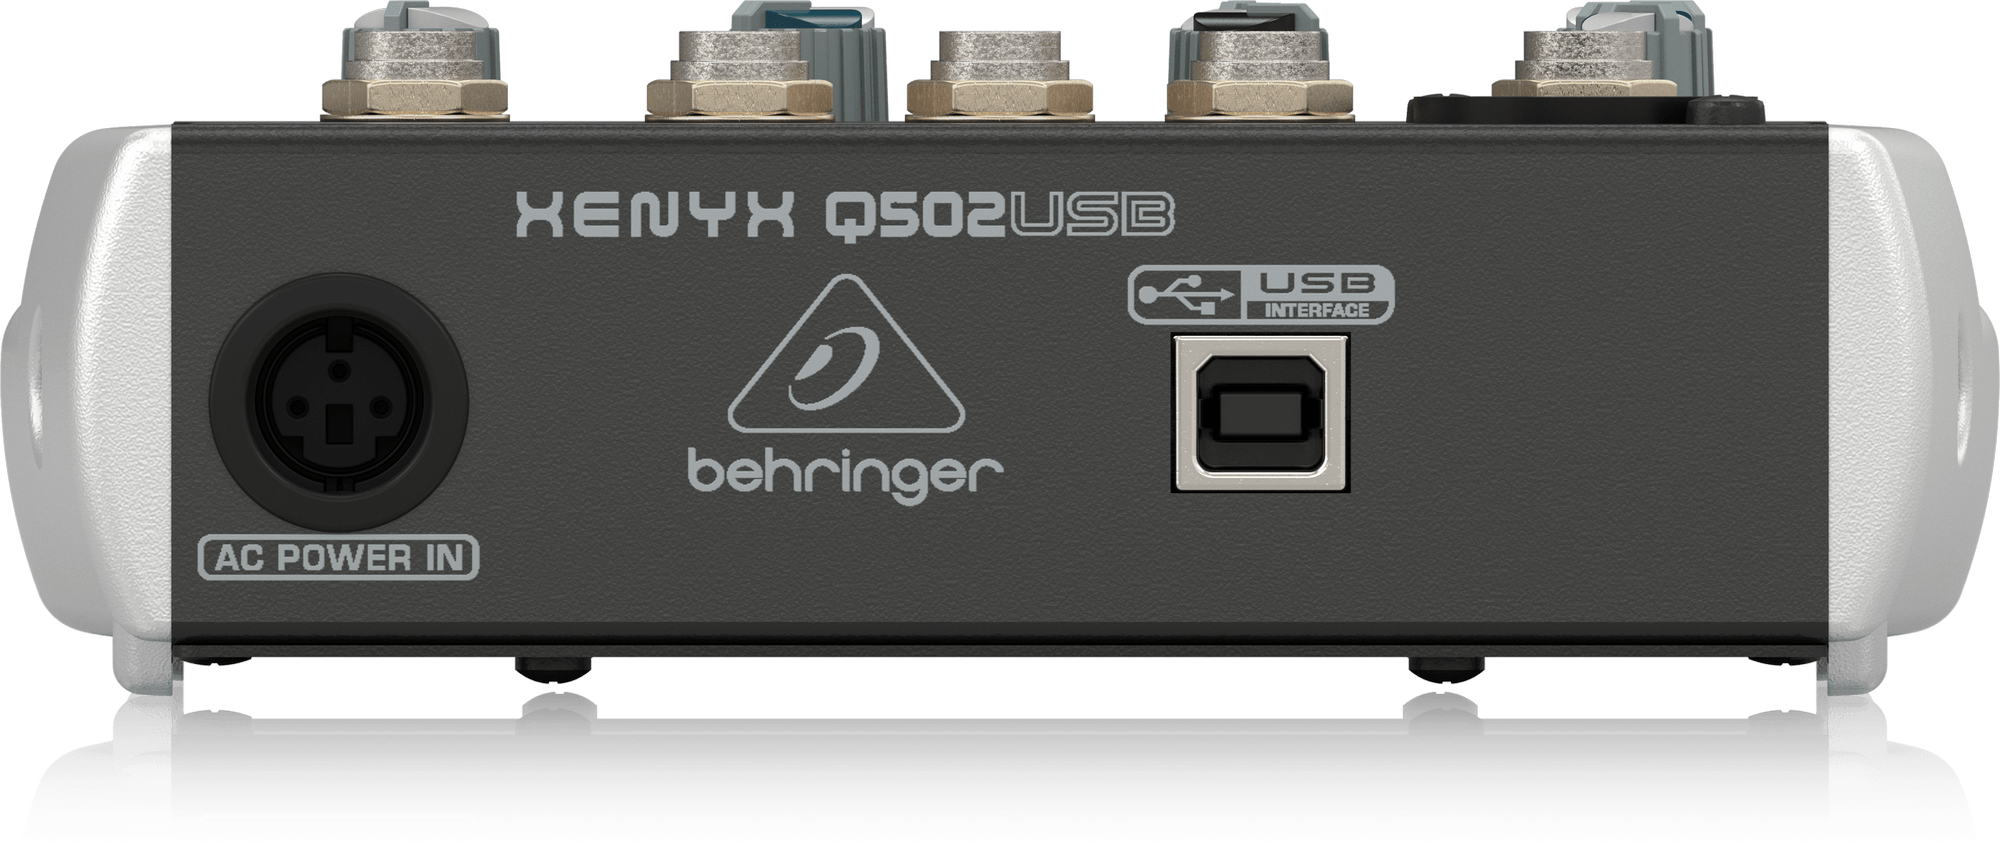 behringer xenyx q502usb recording